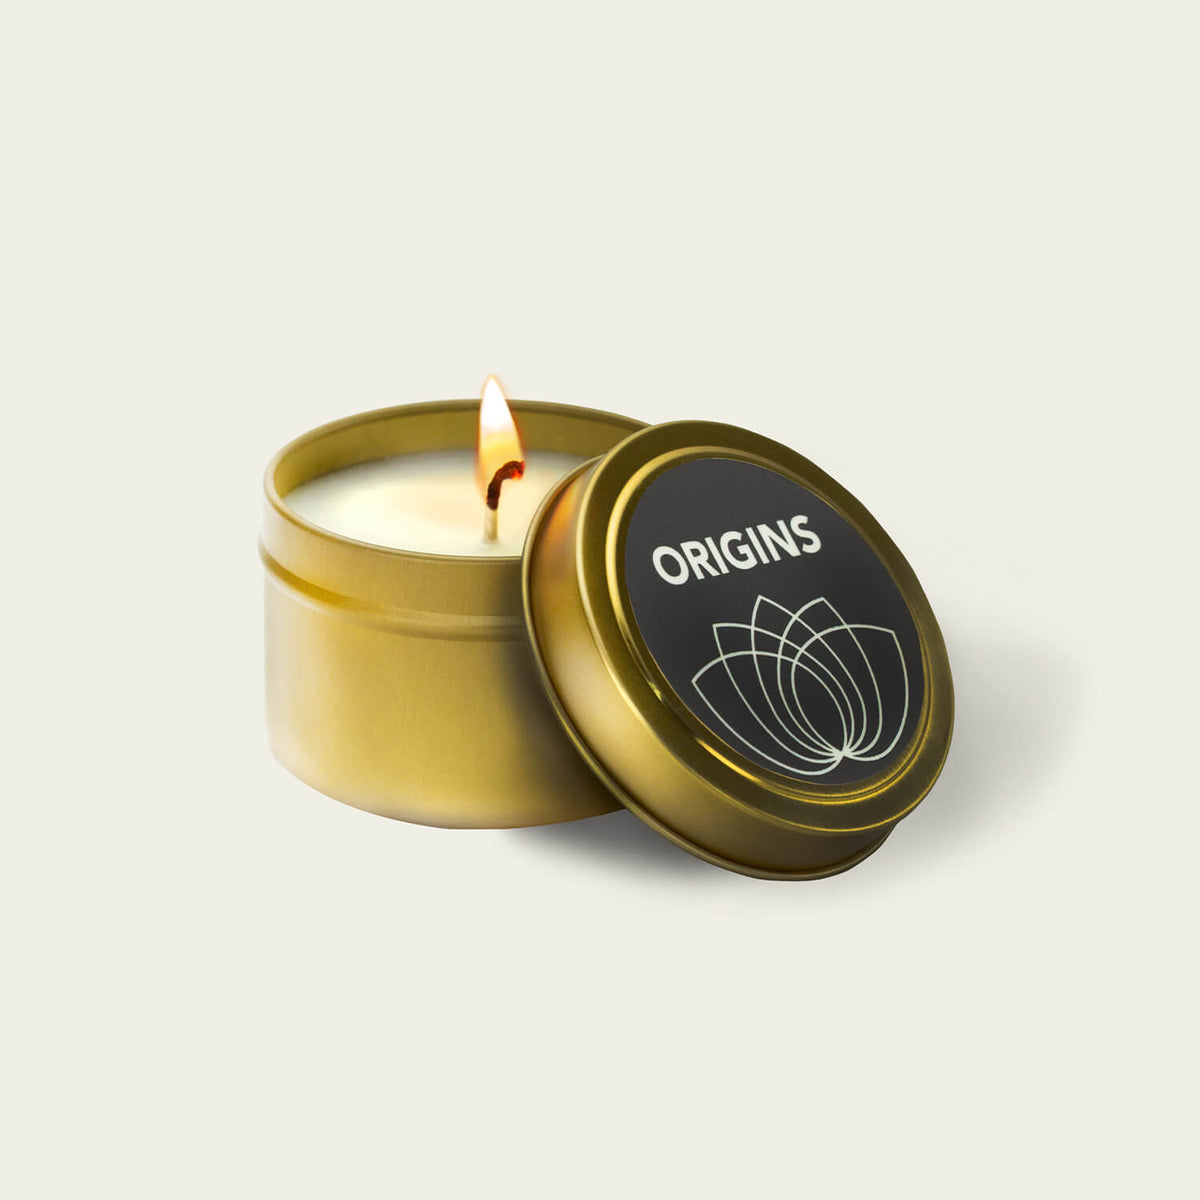 Origins Massage Candle 2 oz